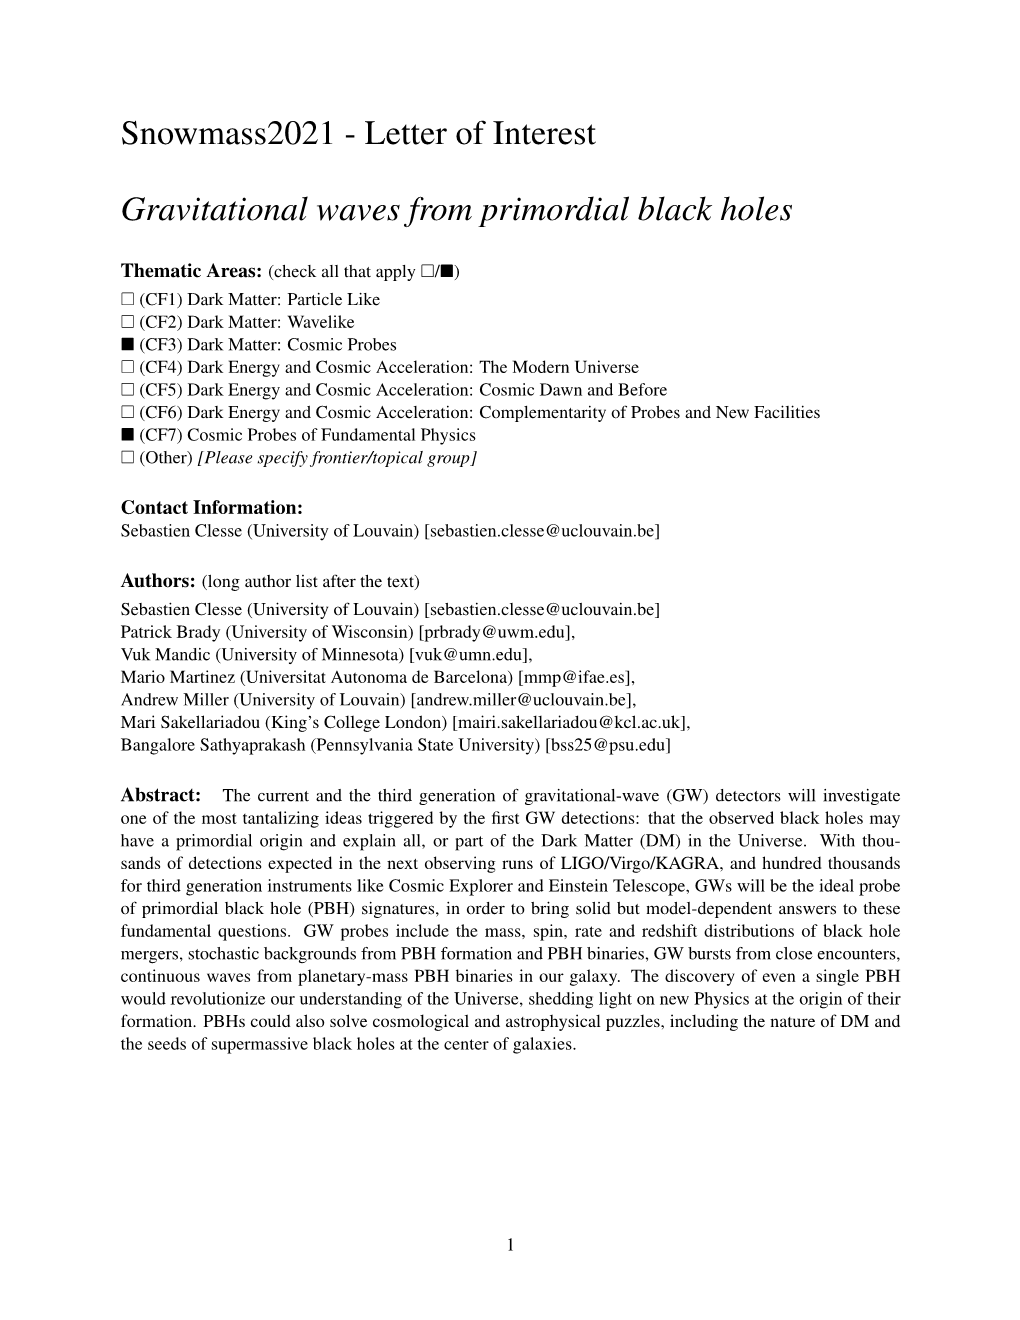 Letter of Interest Gravitational Waves from Primordial Black Holes